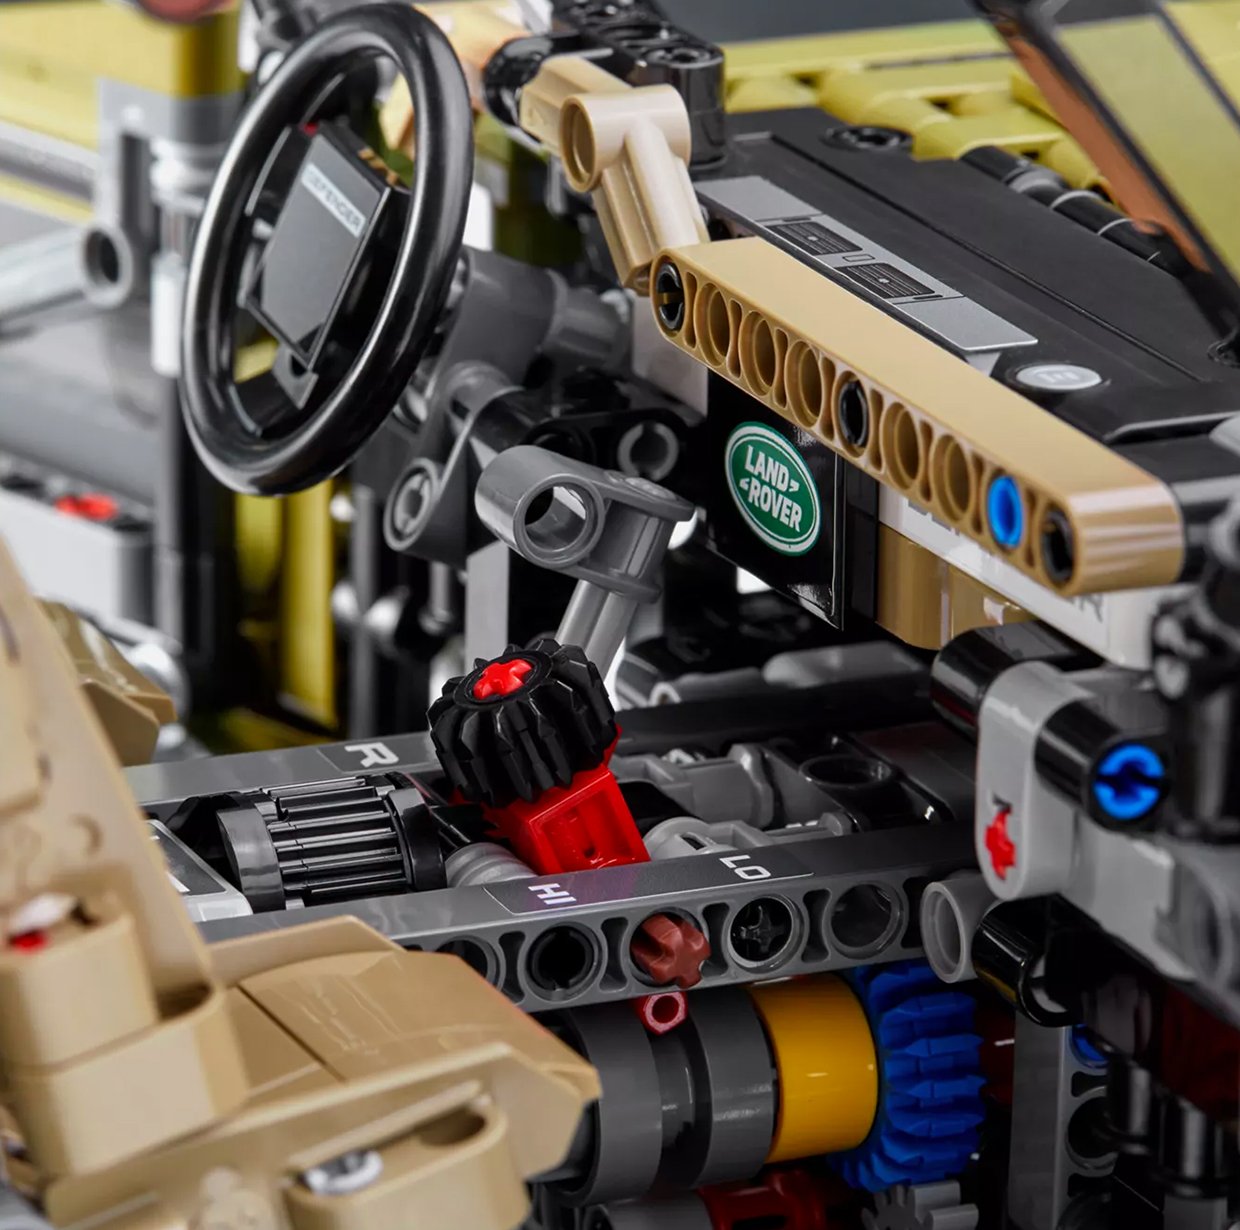 LEGO Technic Defender